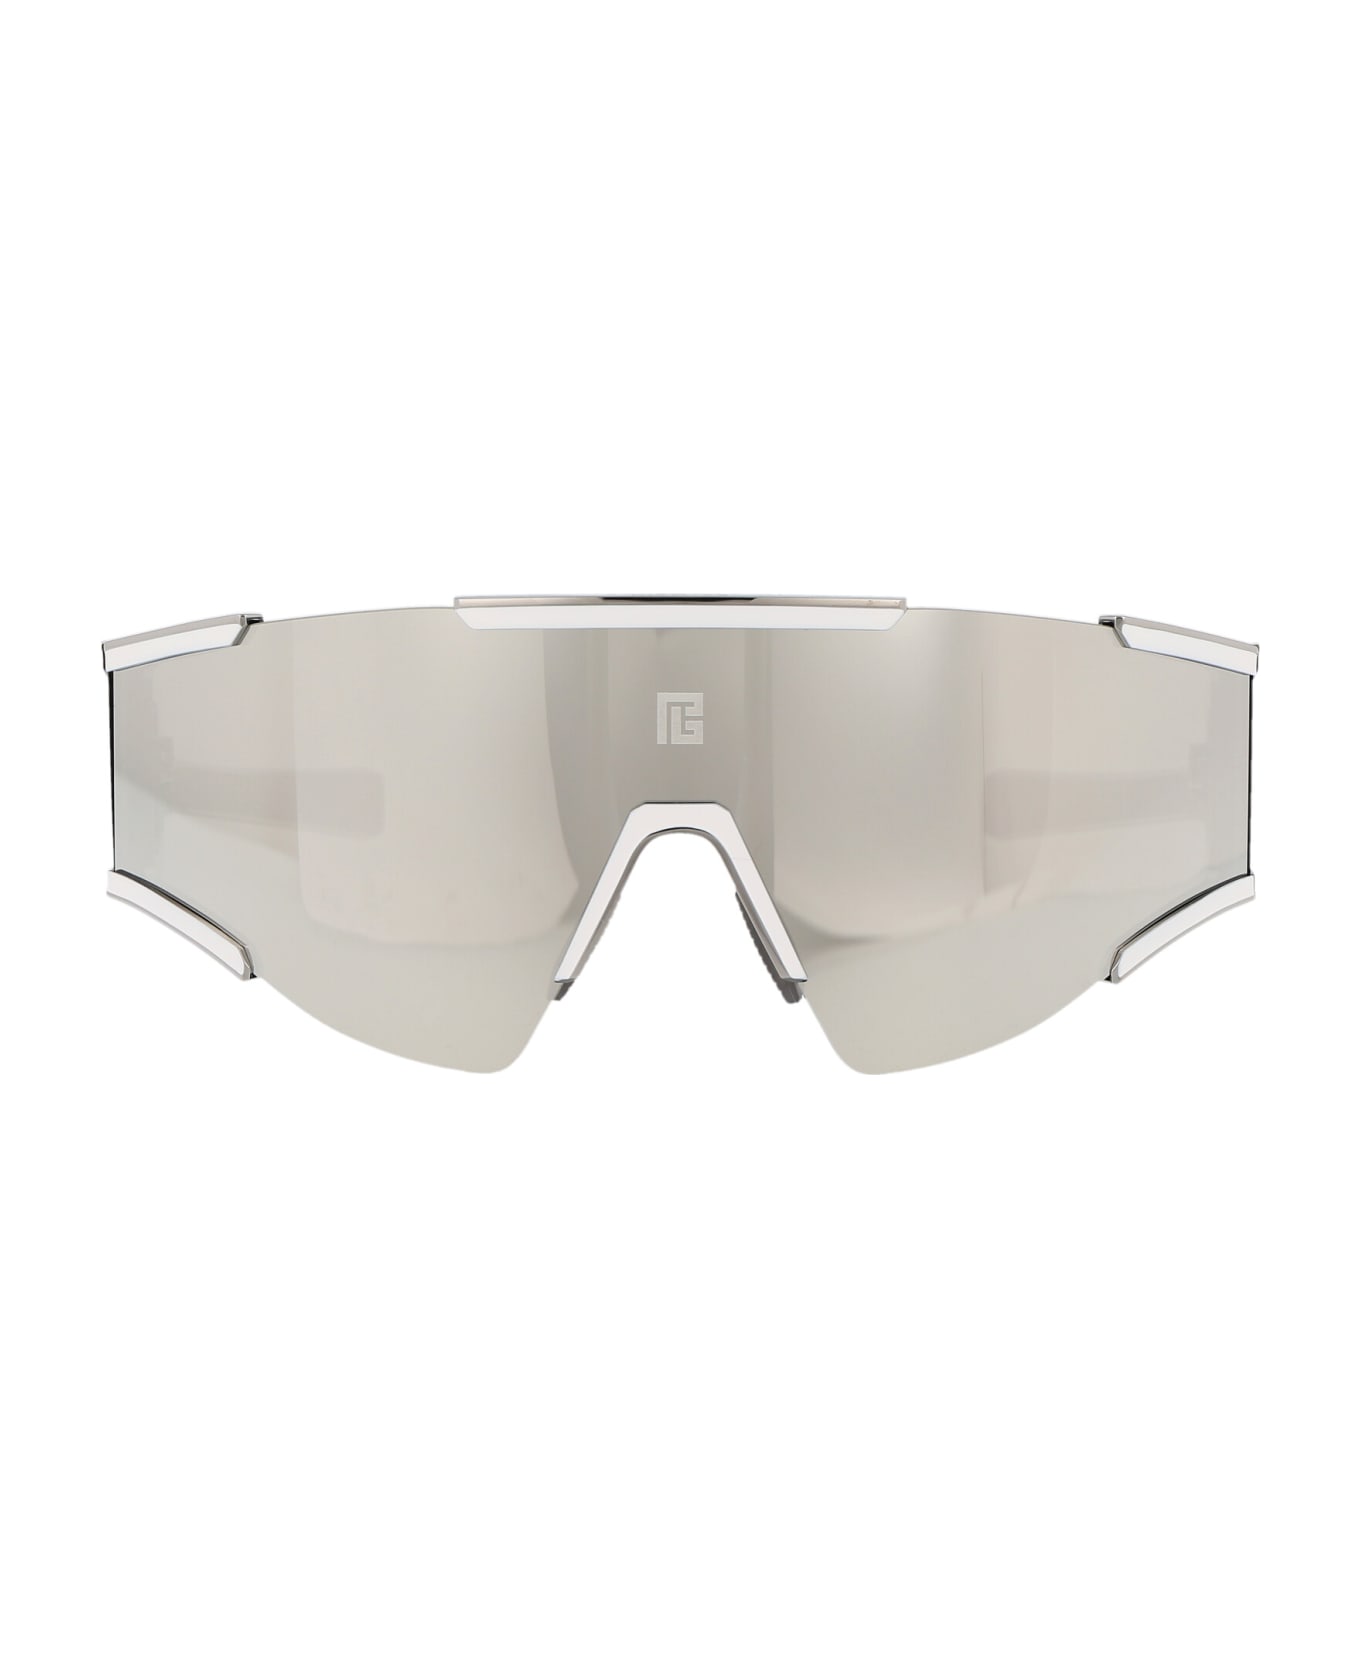 Balmain Fleche Sunglasses - 138D PLD - GRY サングラス